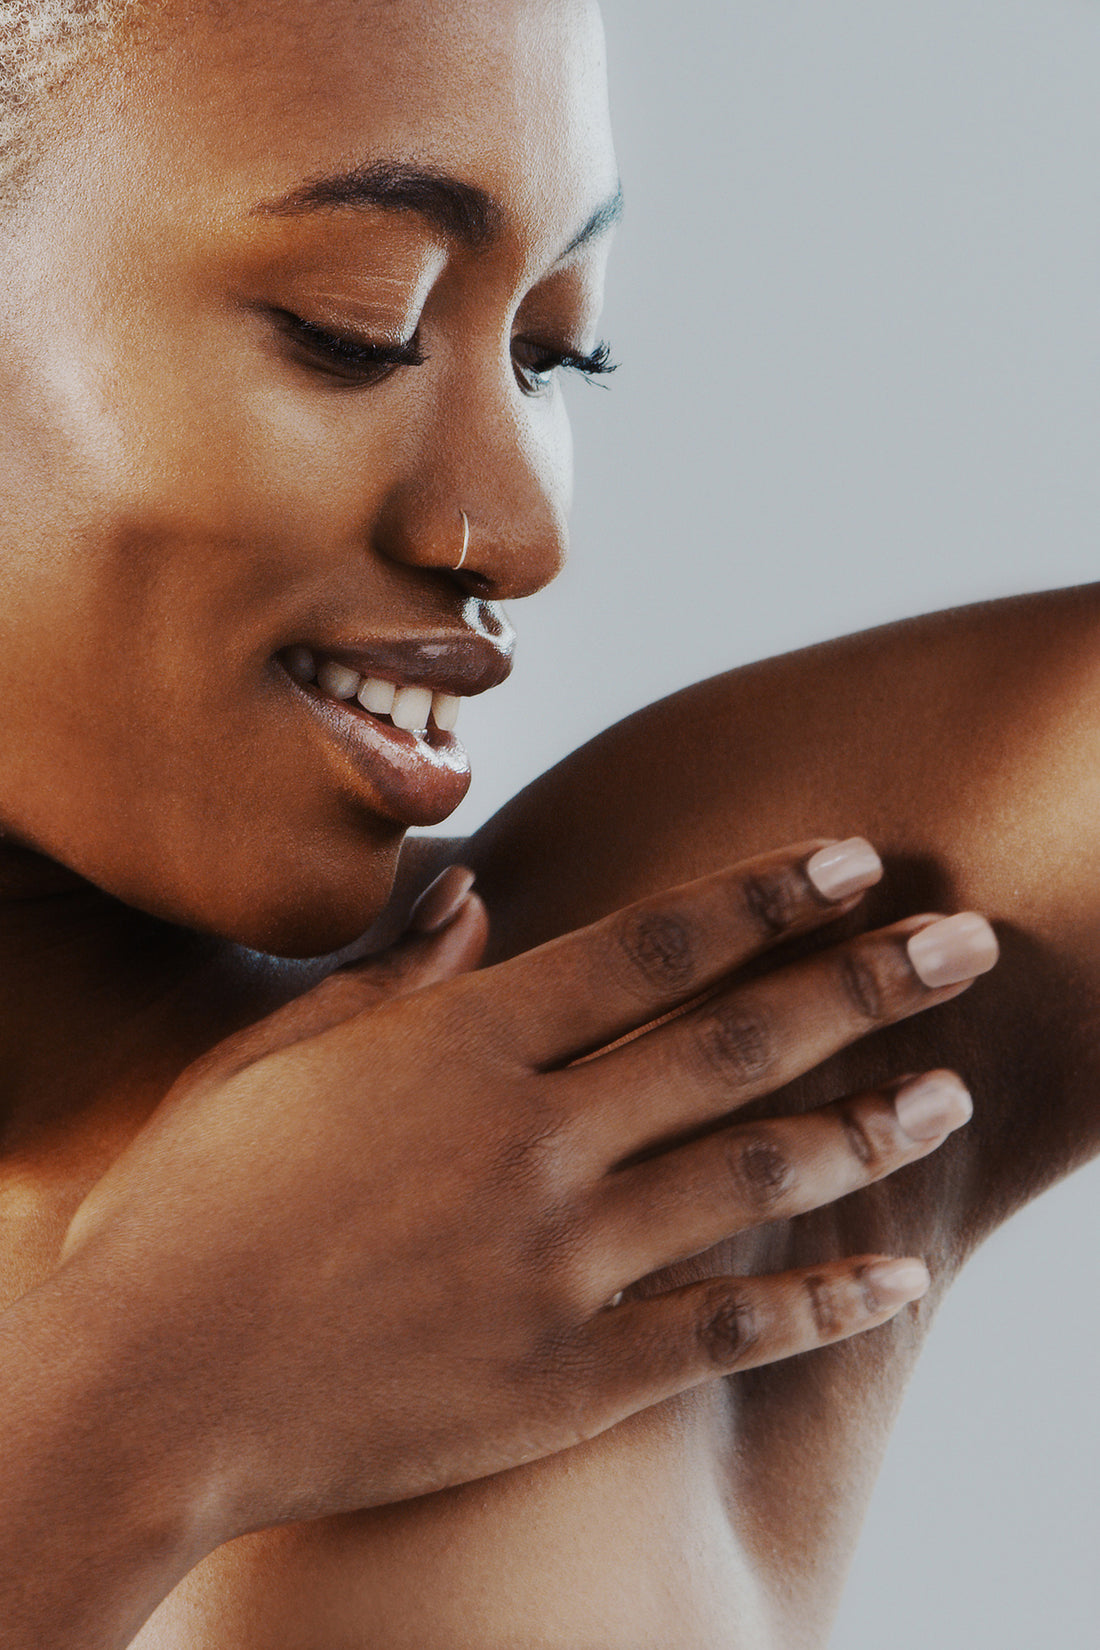 Woman Rubbing Deodorant on Arm